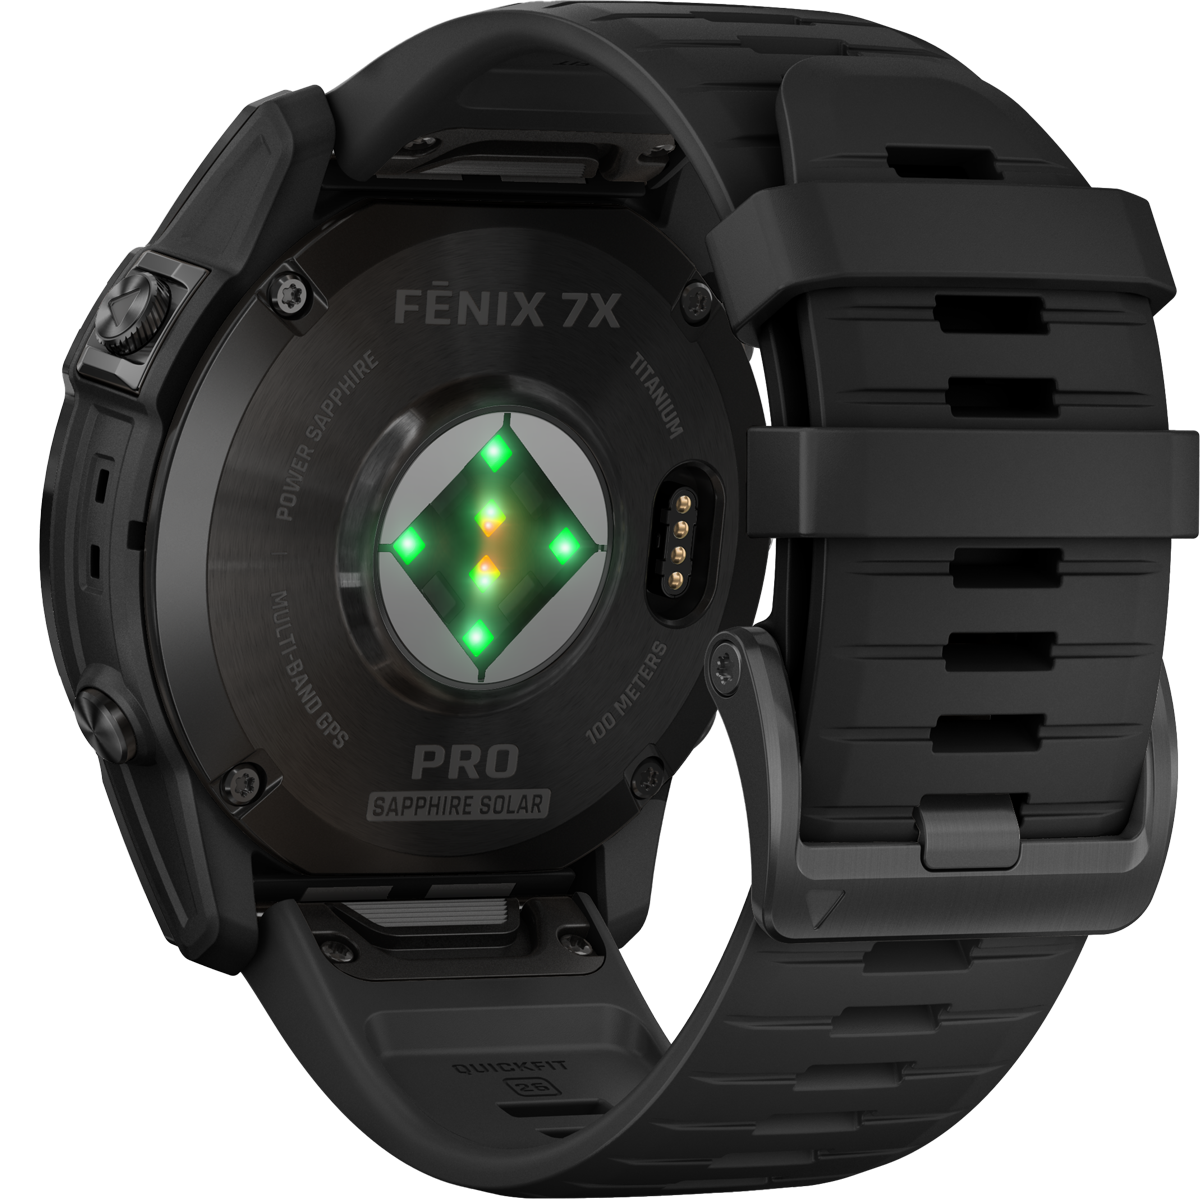 Fenix 7X Pro Sapphire Solar Carbon Gray alternate view